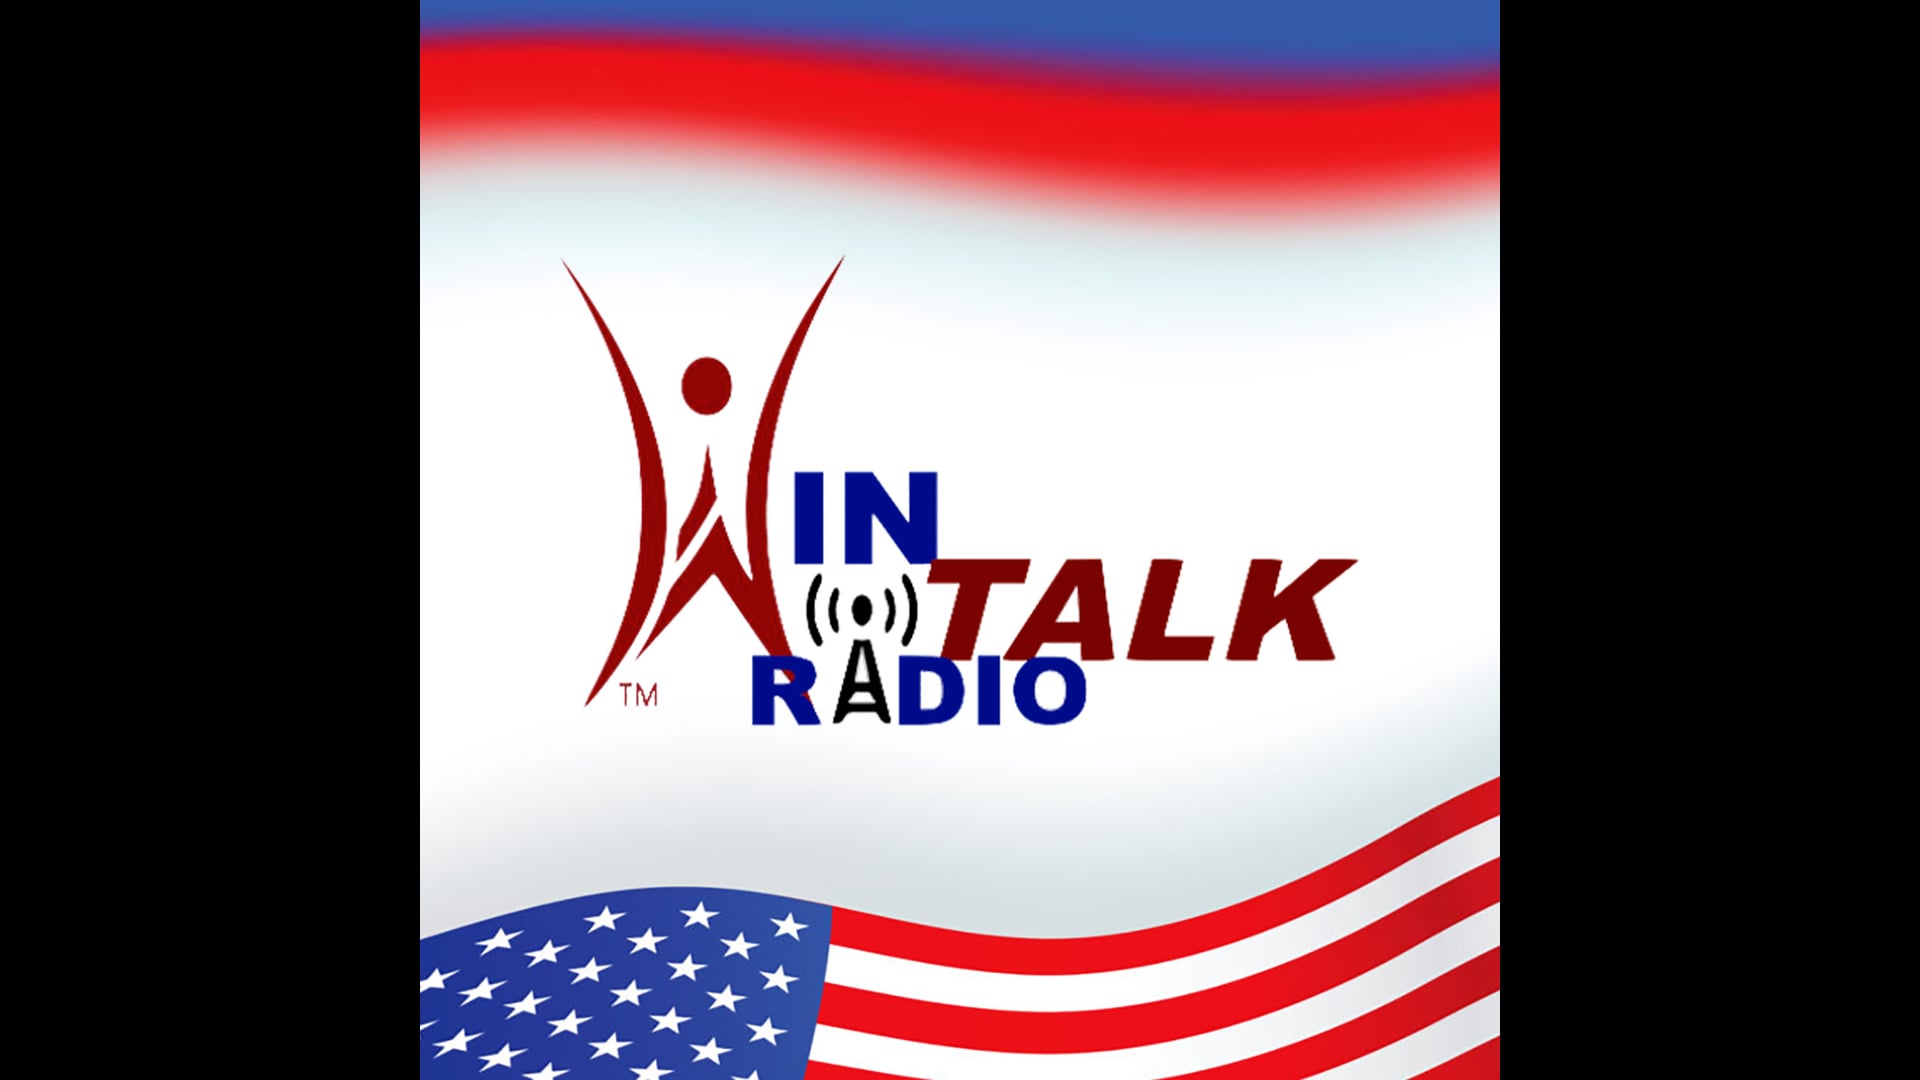 WIN Talk Radio Episode 5 – USA Military